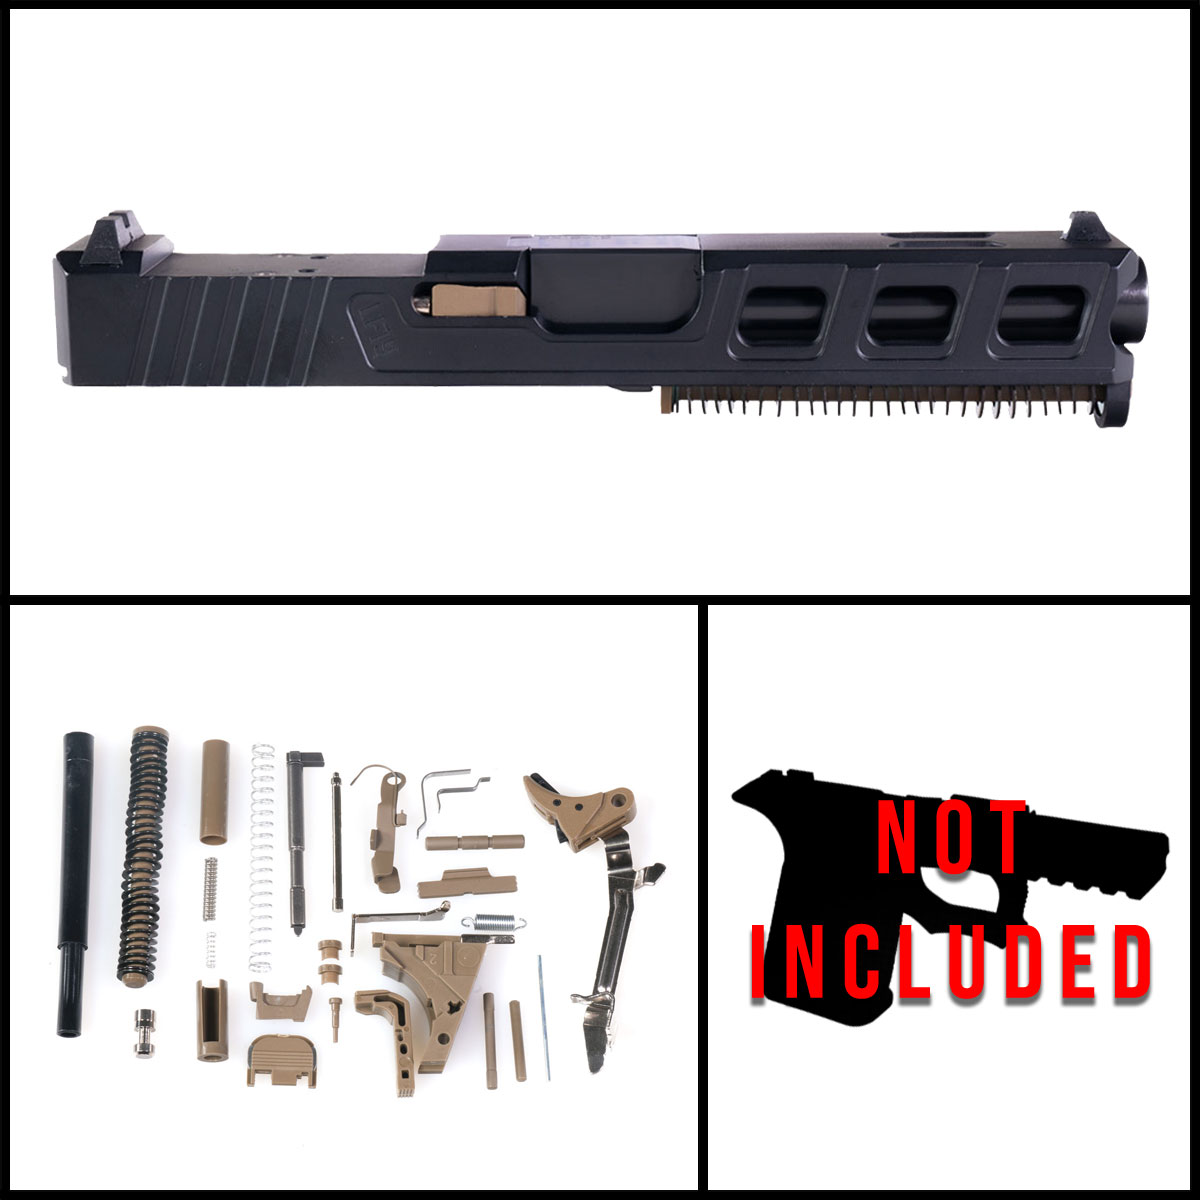 DDS 'Macadam' 9mm Full Pistol Build Kit (Everything Minus Frame) - Glock 19 Gen 1-3 Compatible